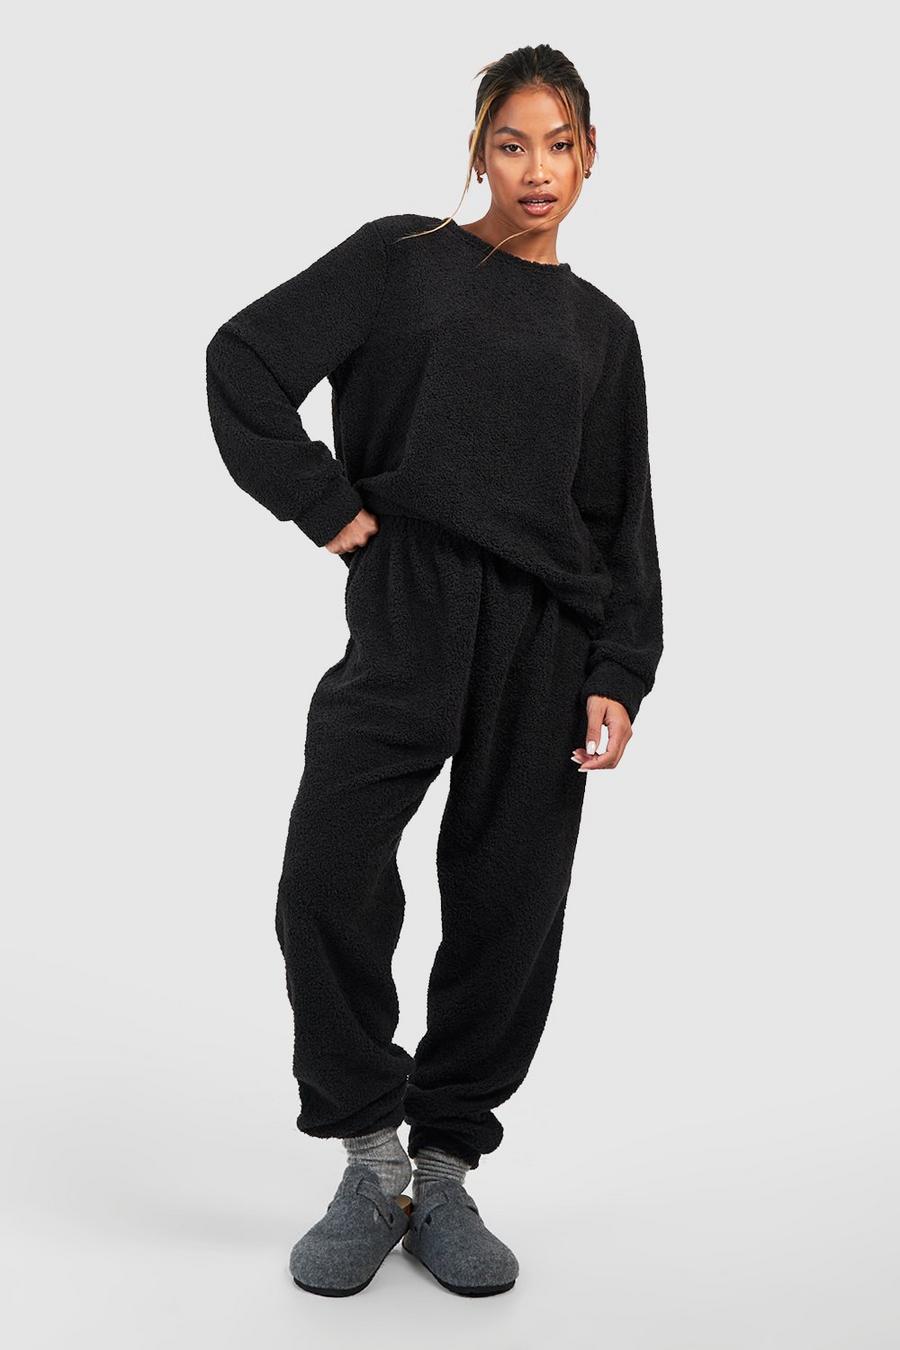 Black Hers Matching Teddy Long Sleeve Loungewear Jogger Set